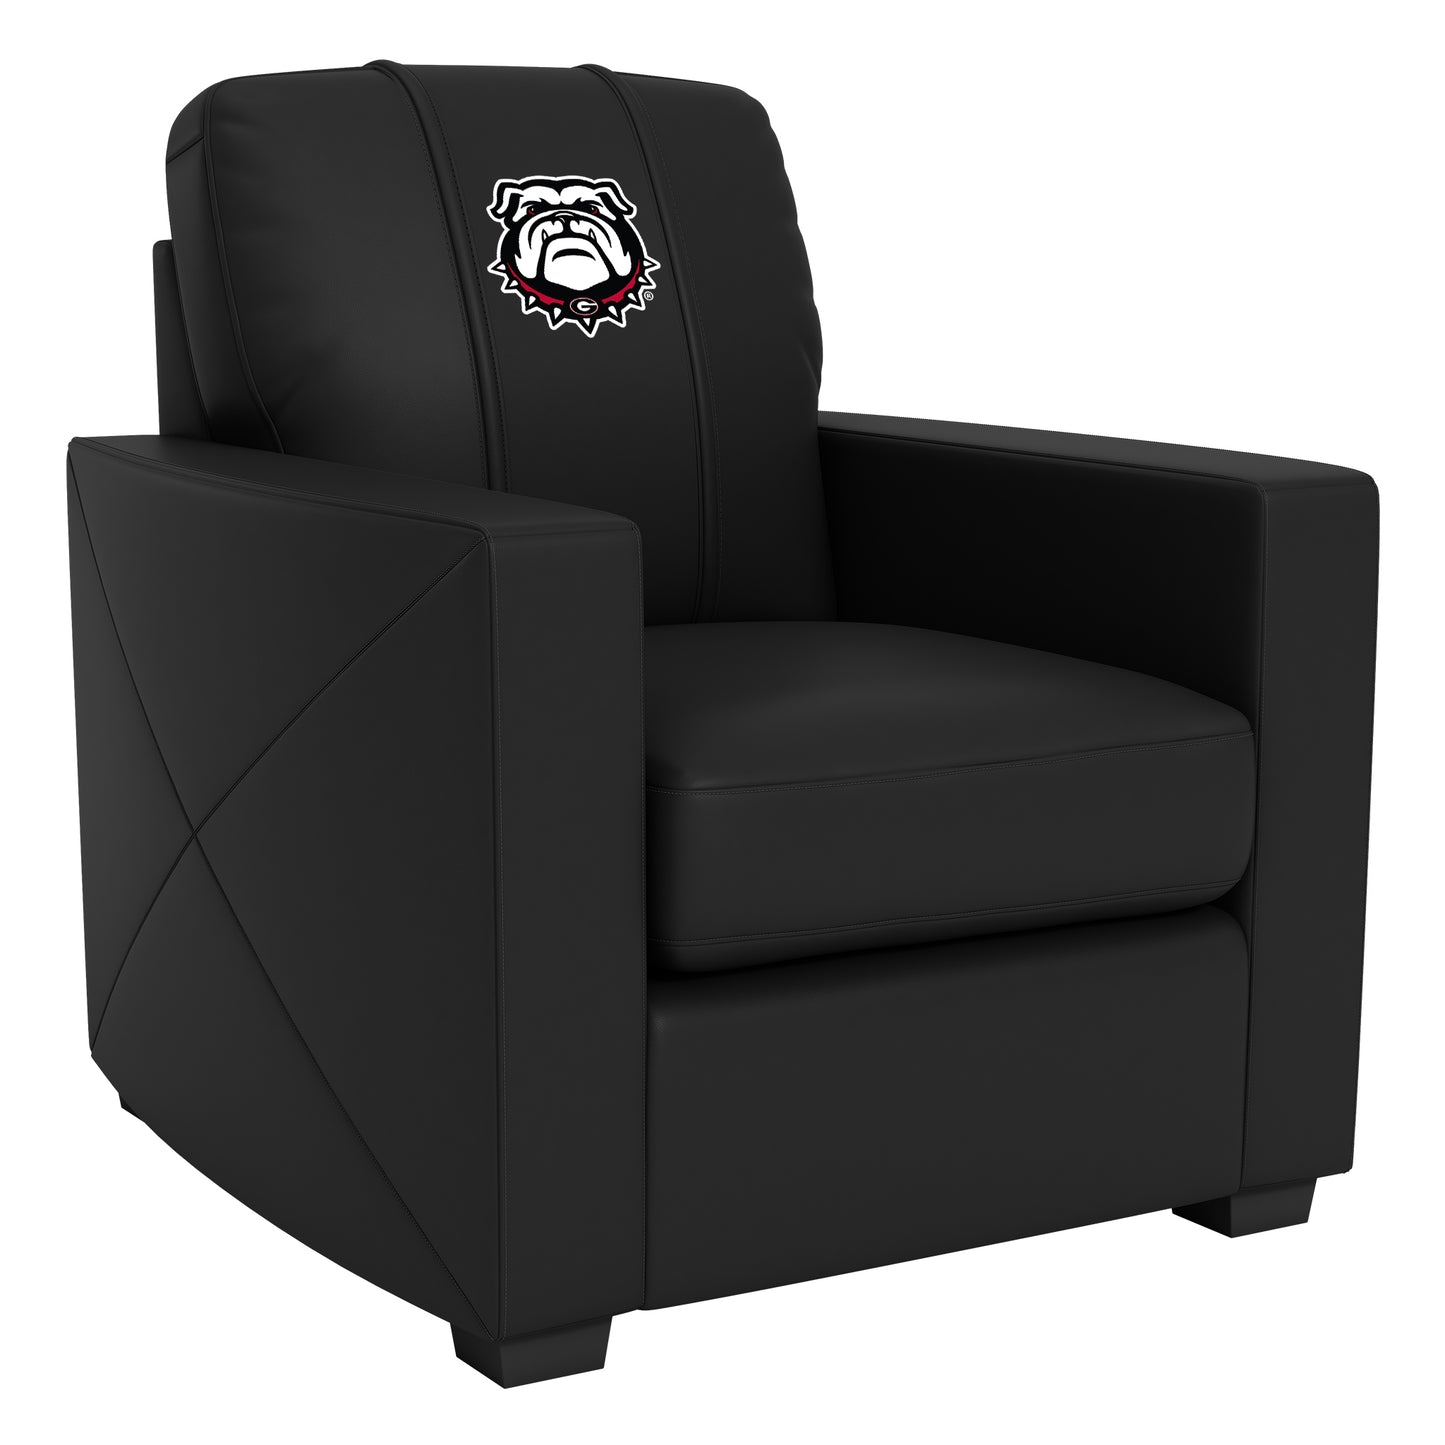 Silver Club Chair with Georgia Bulldogs Alternate Logo